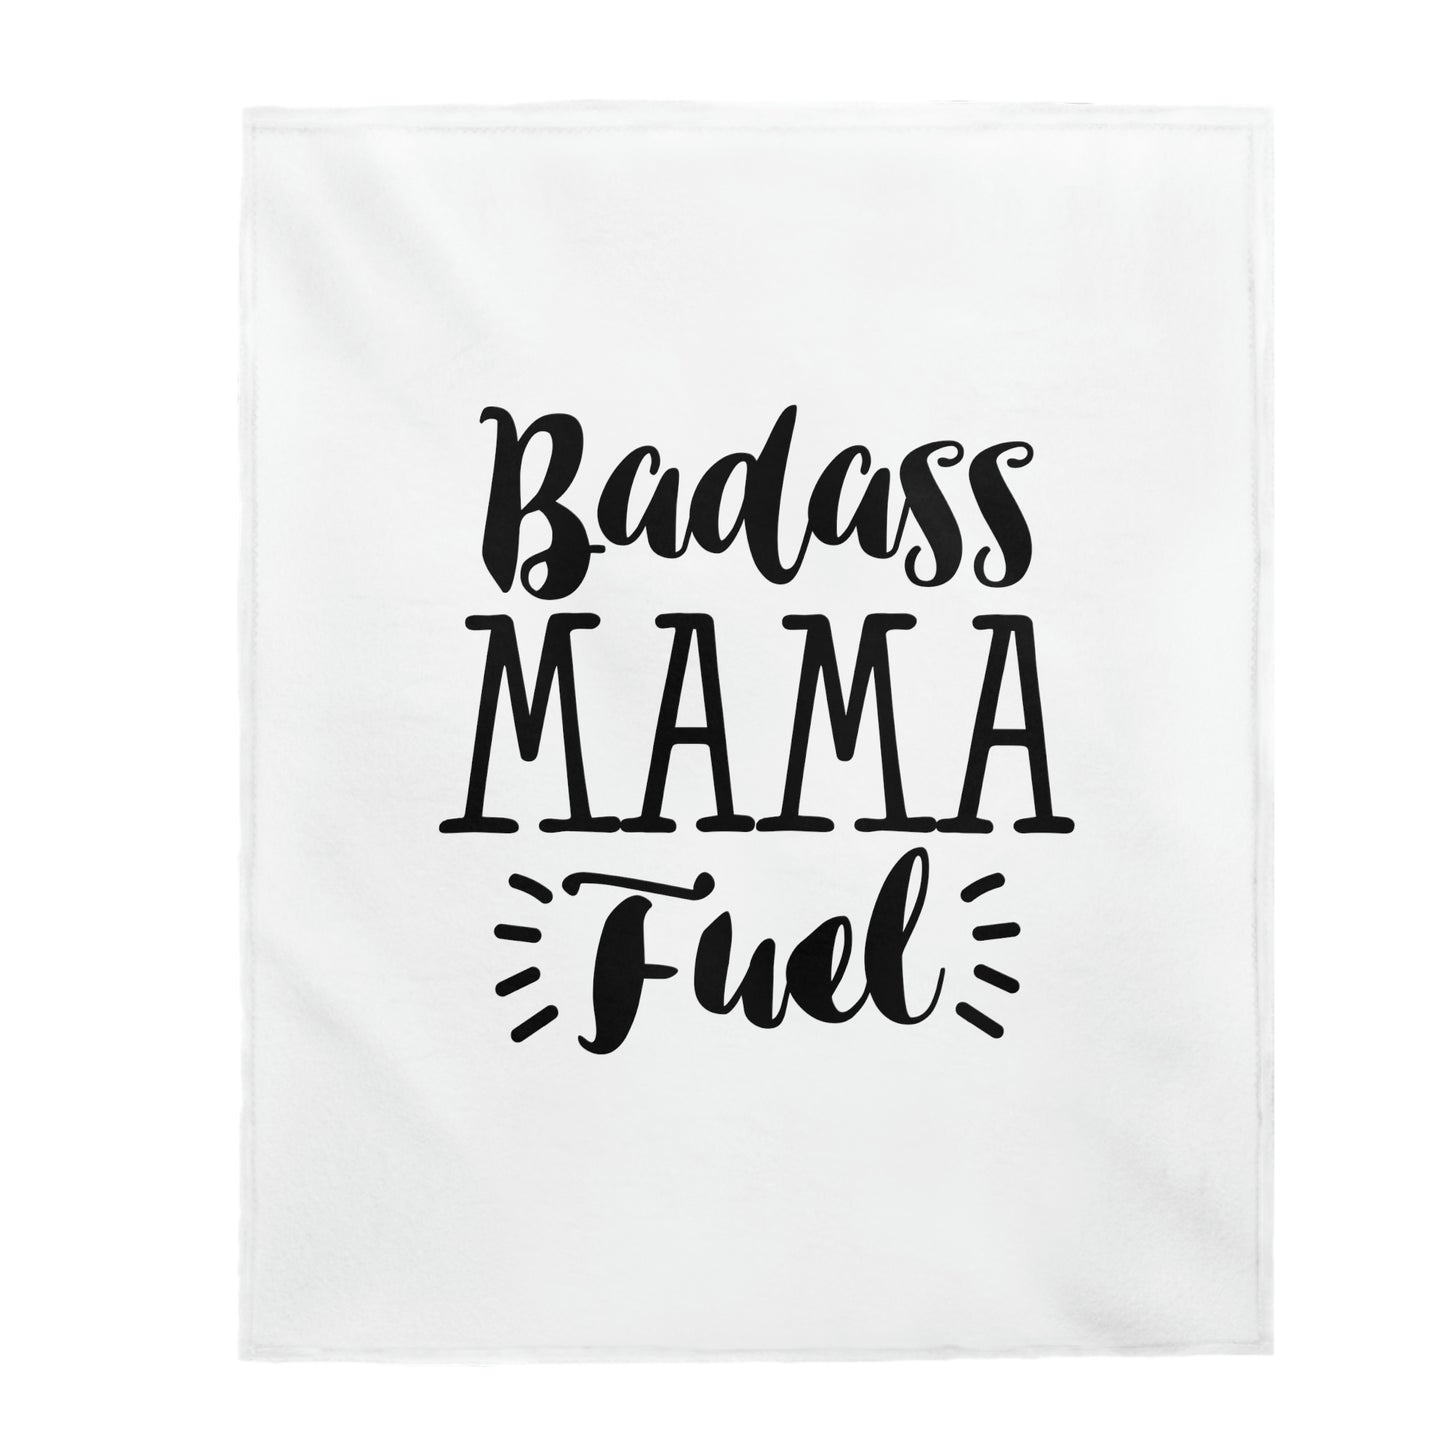 Badass Mama Fuel - Velveteen Plush Blanket